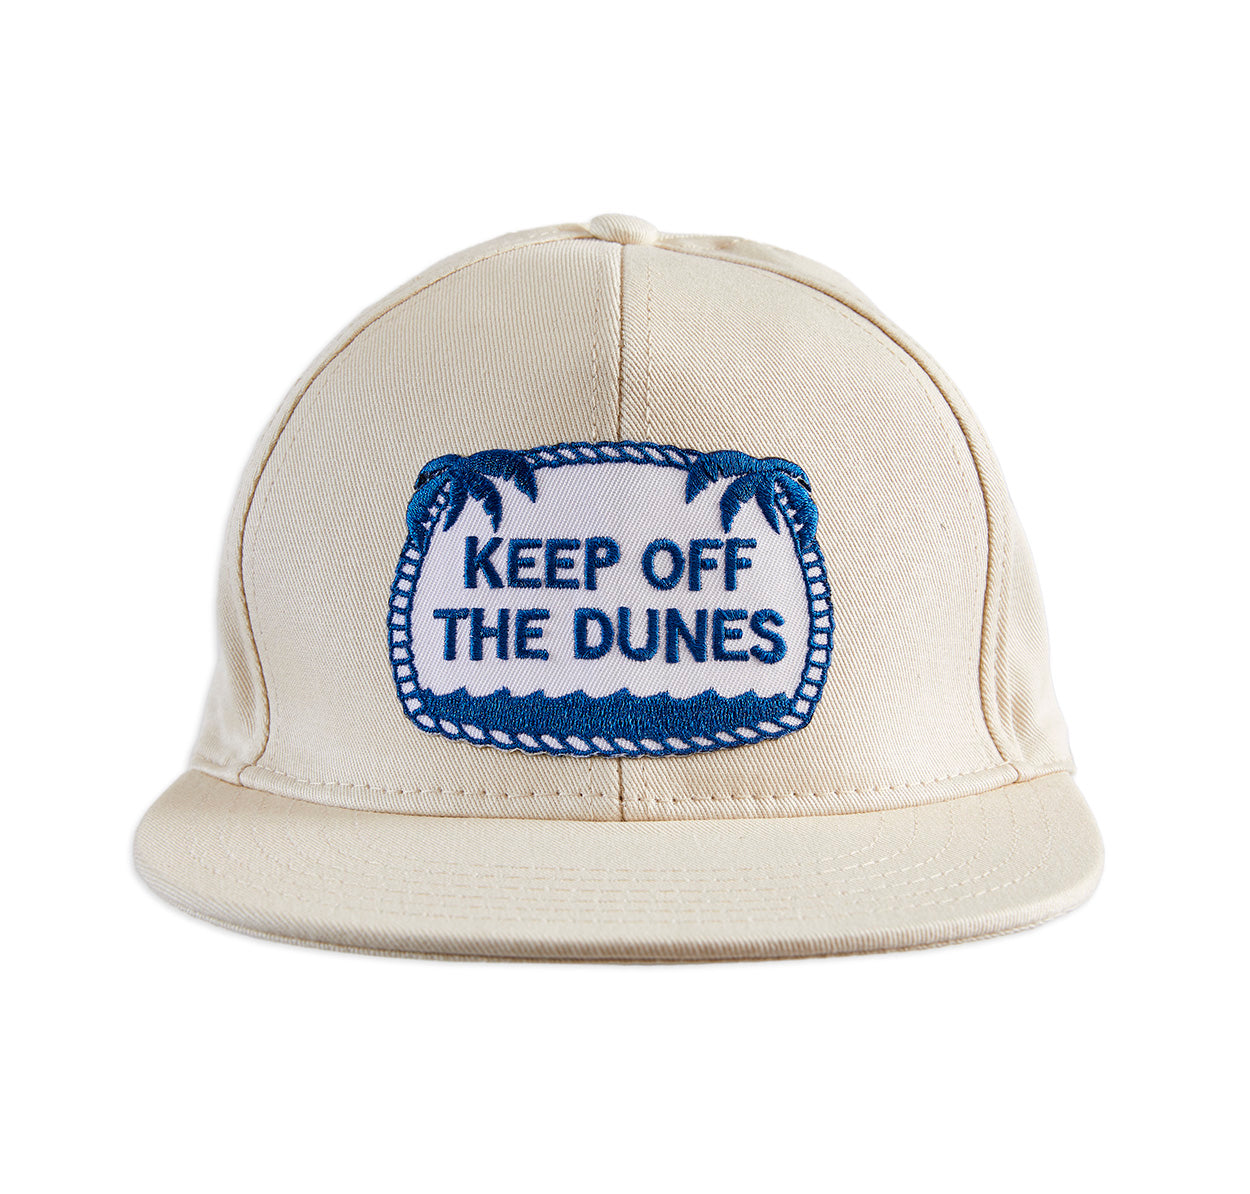 Keep Off the Dunes ball cap